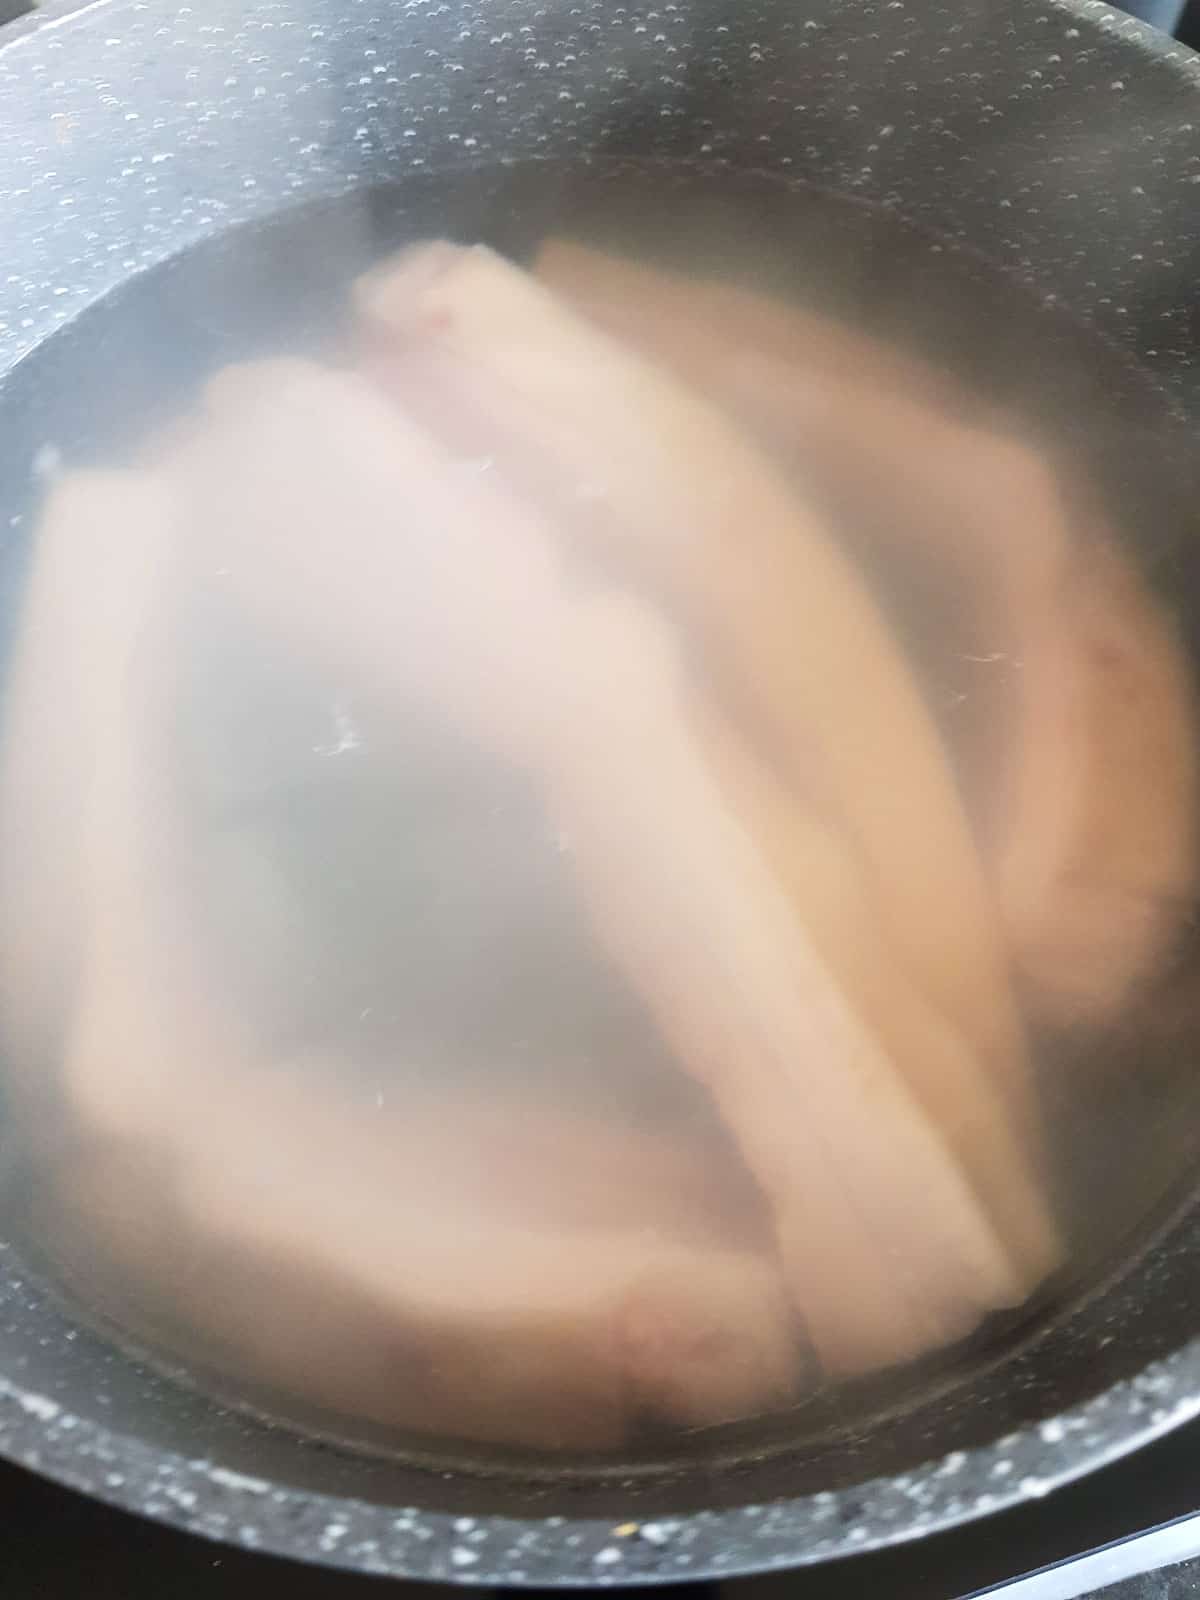 Pork belly boiling in a pot.